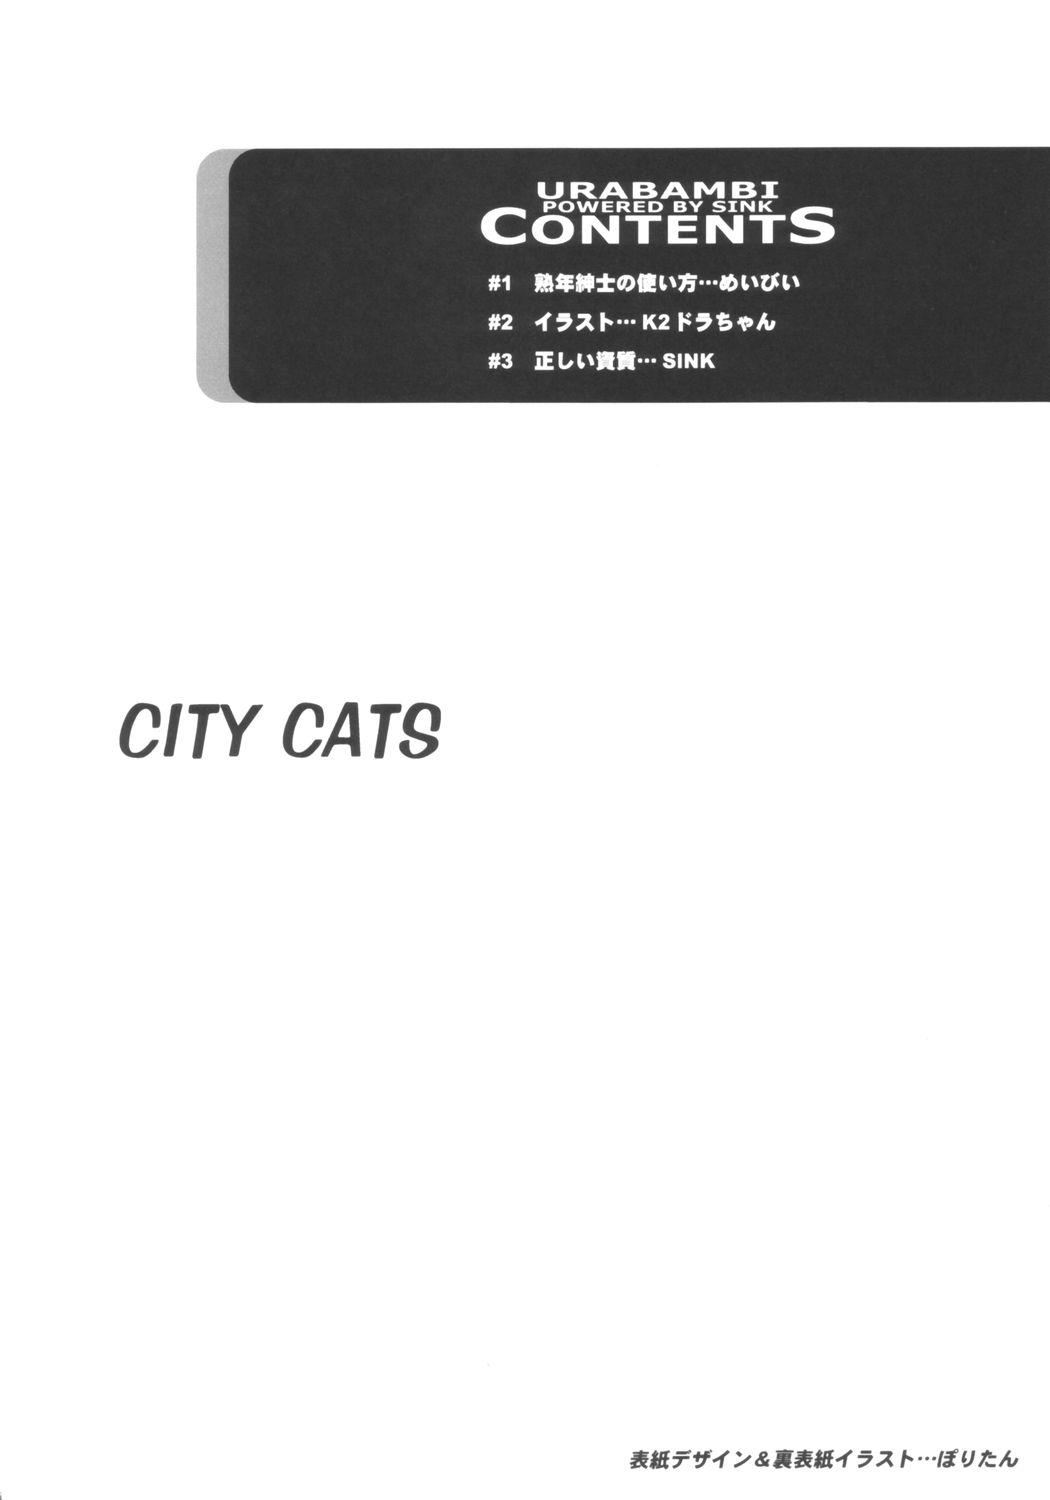 Condom Urabambi Vol. 21 - City Cats - Kikis delivery service Fat - Page 3